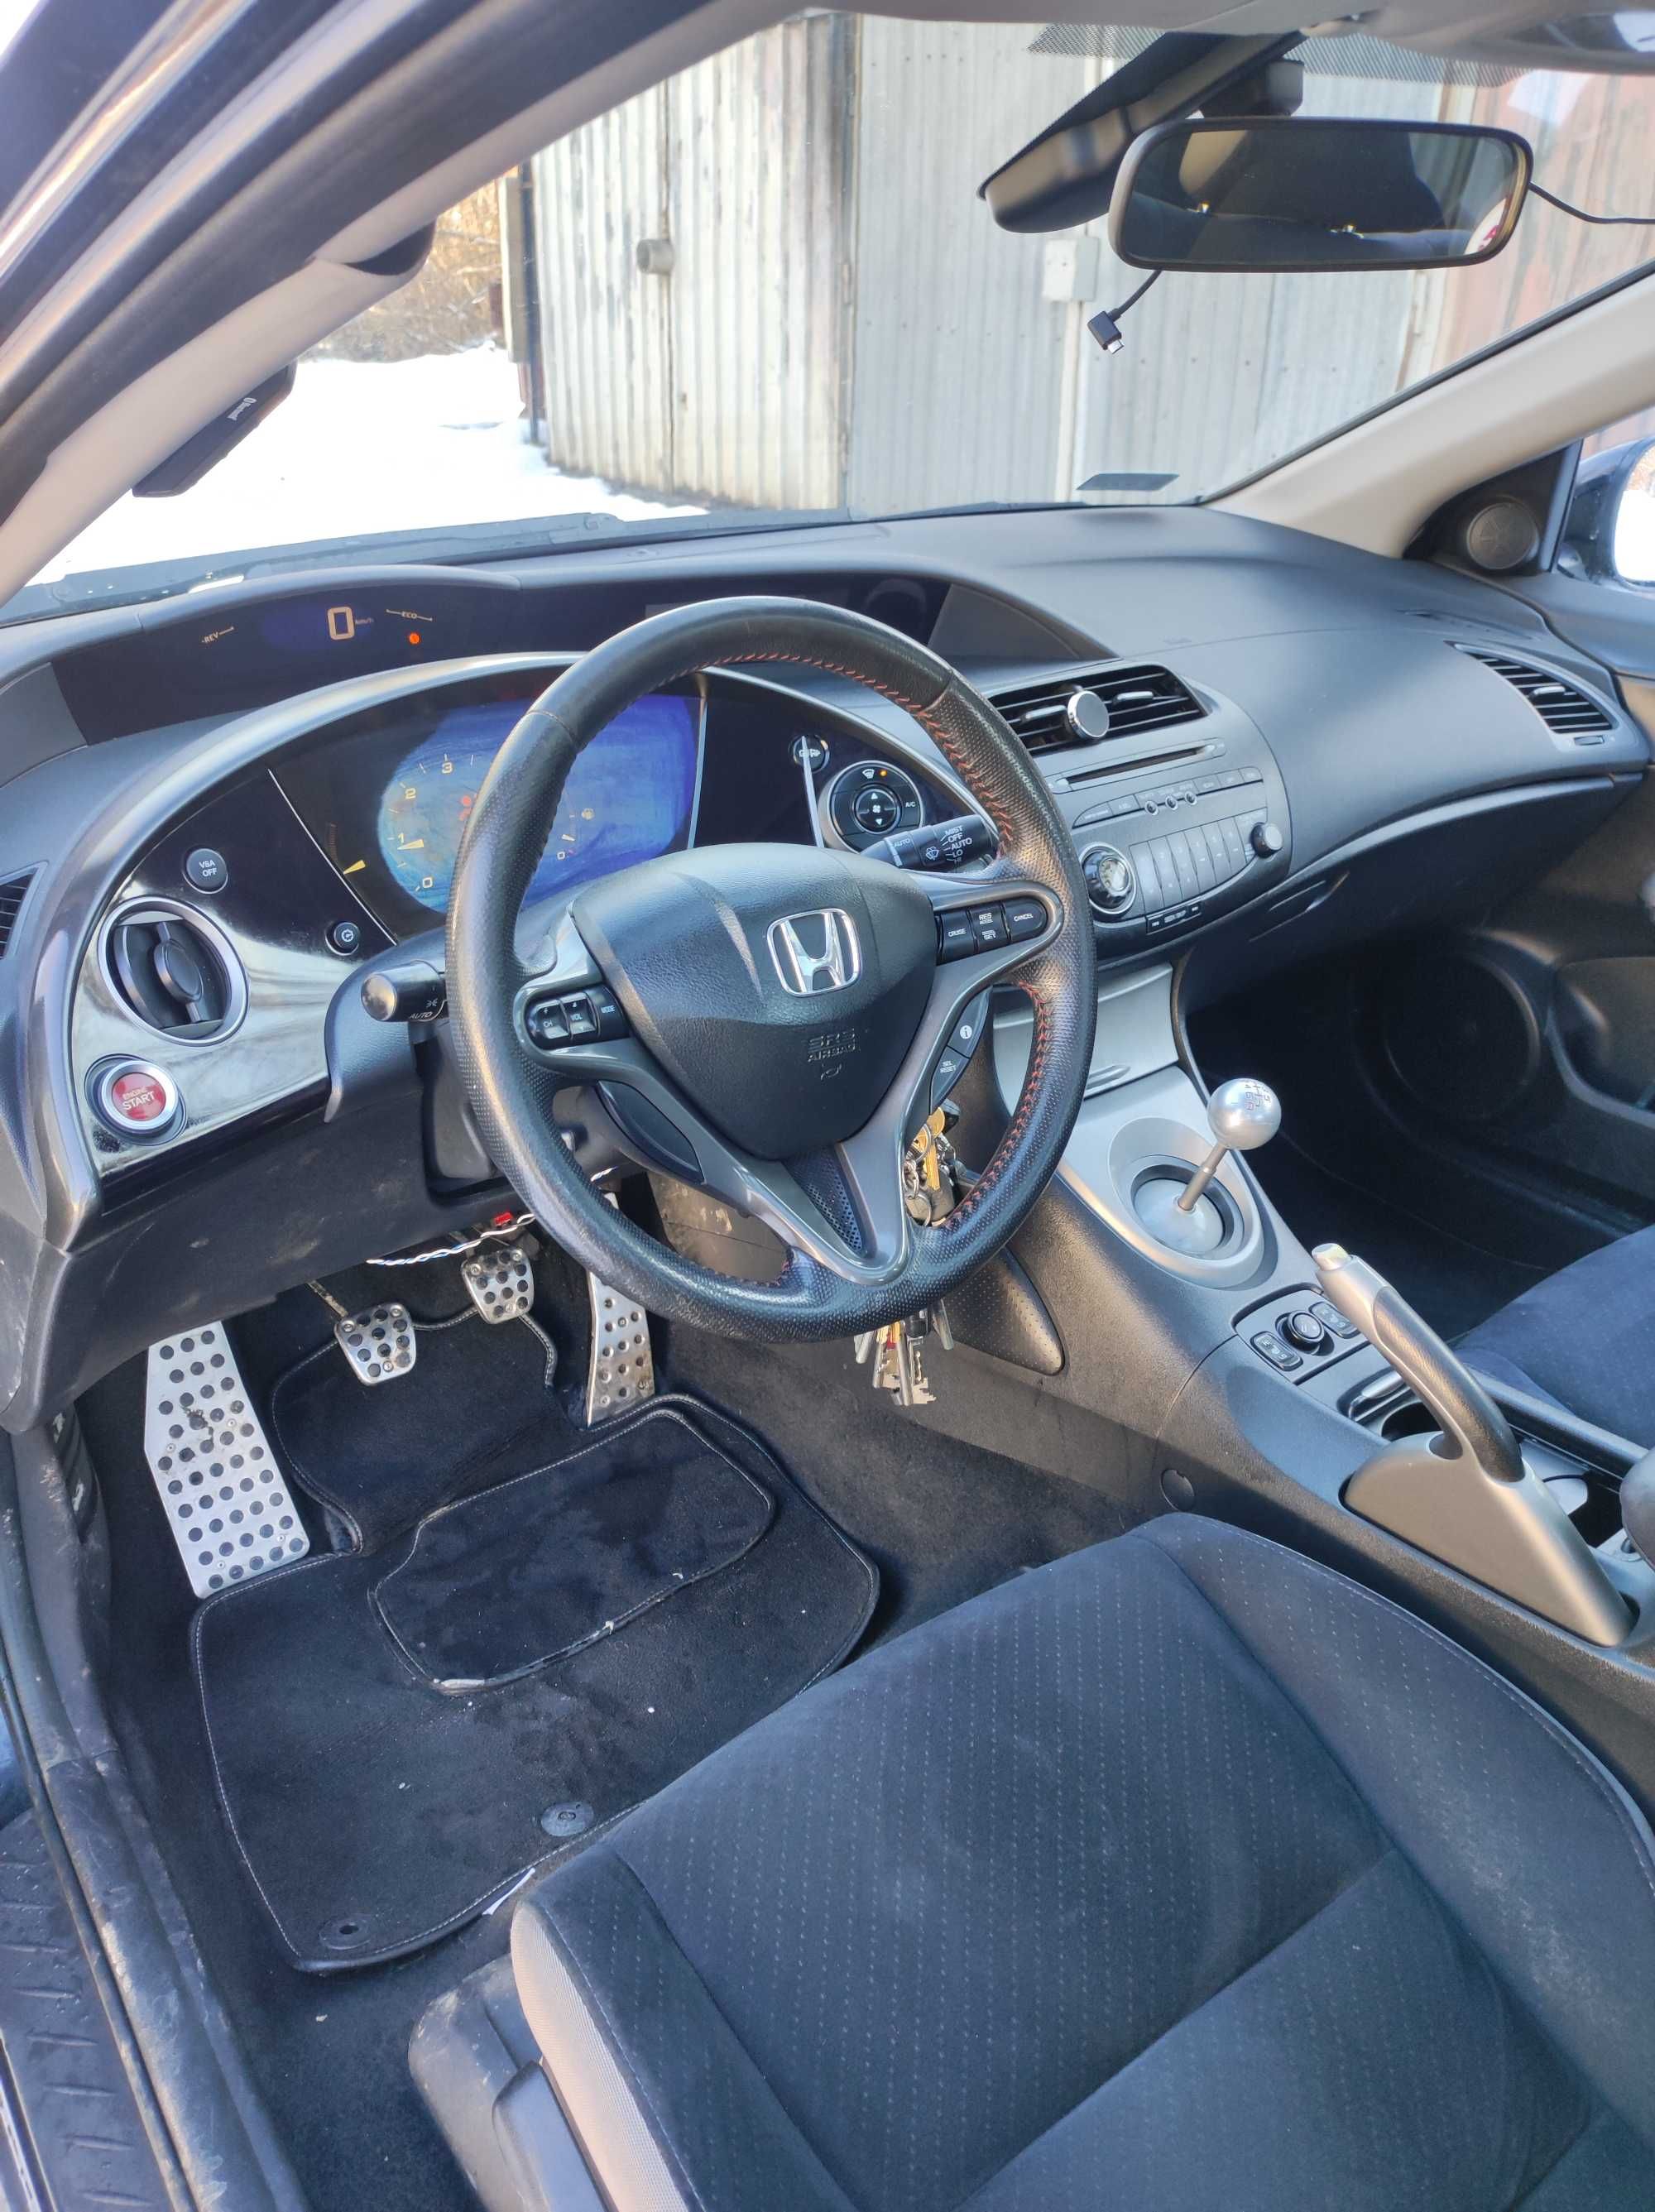 Honda Civic Ufo - Zadbana